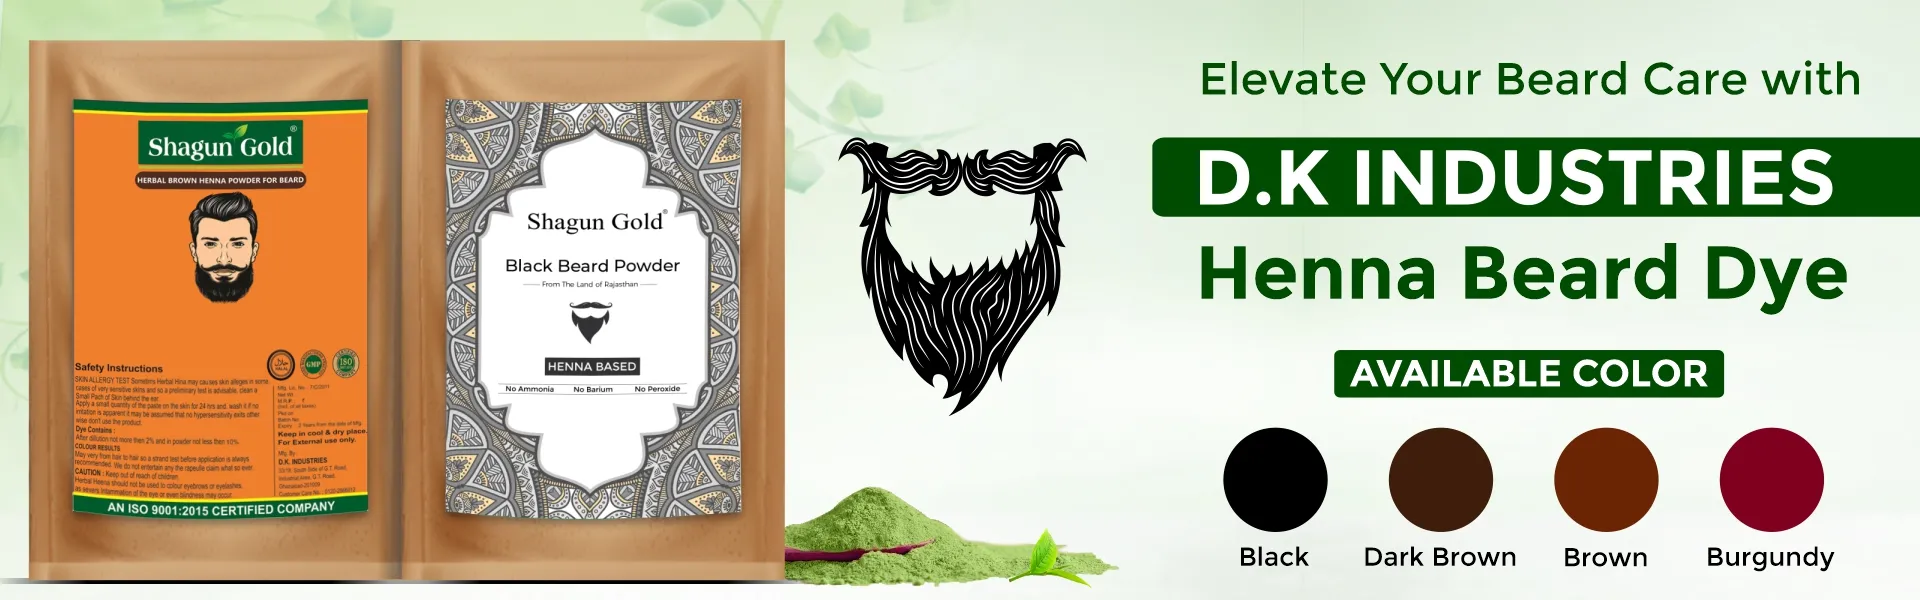 Henna Beard Dye banner - www.dkihenna.com